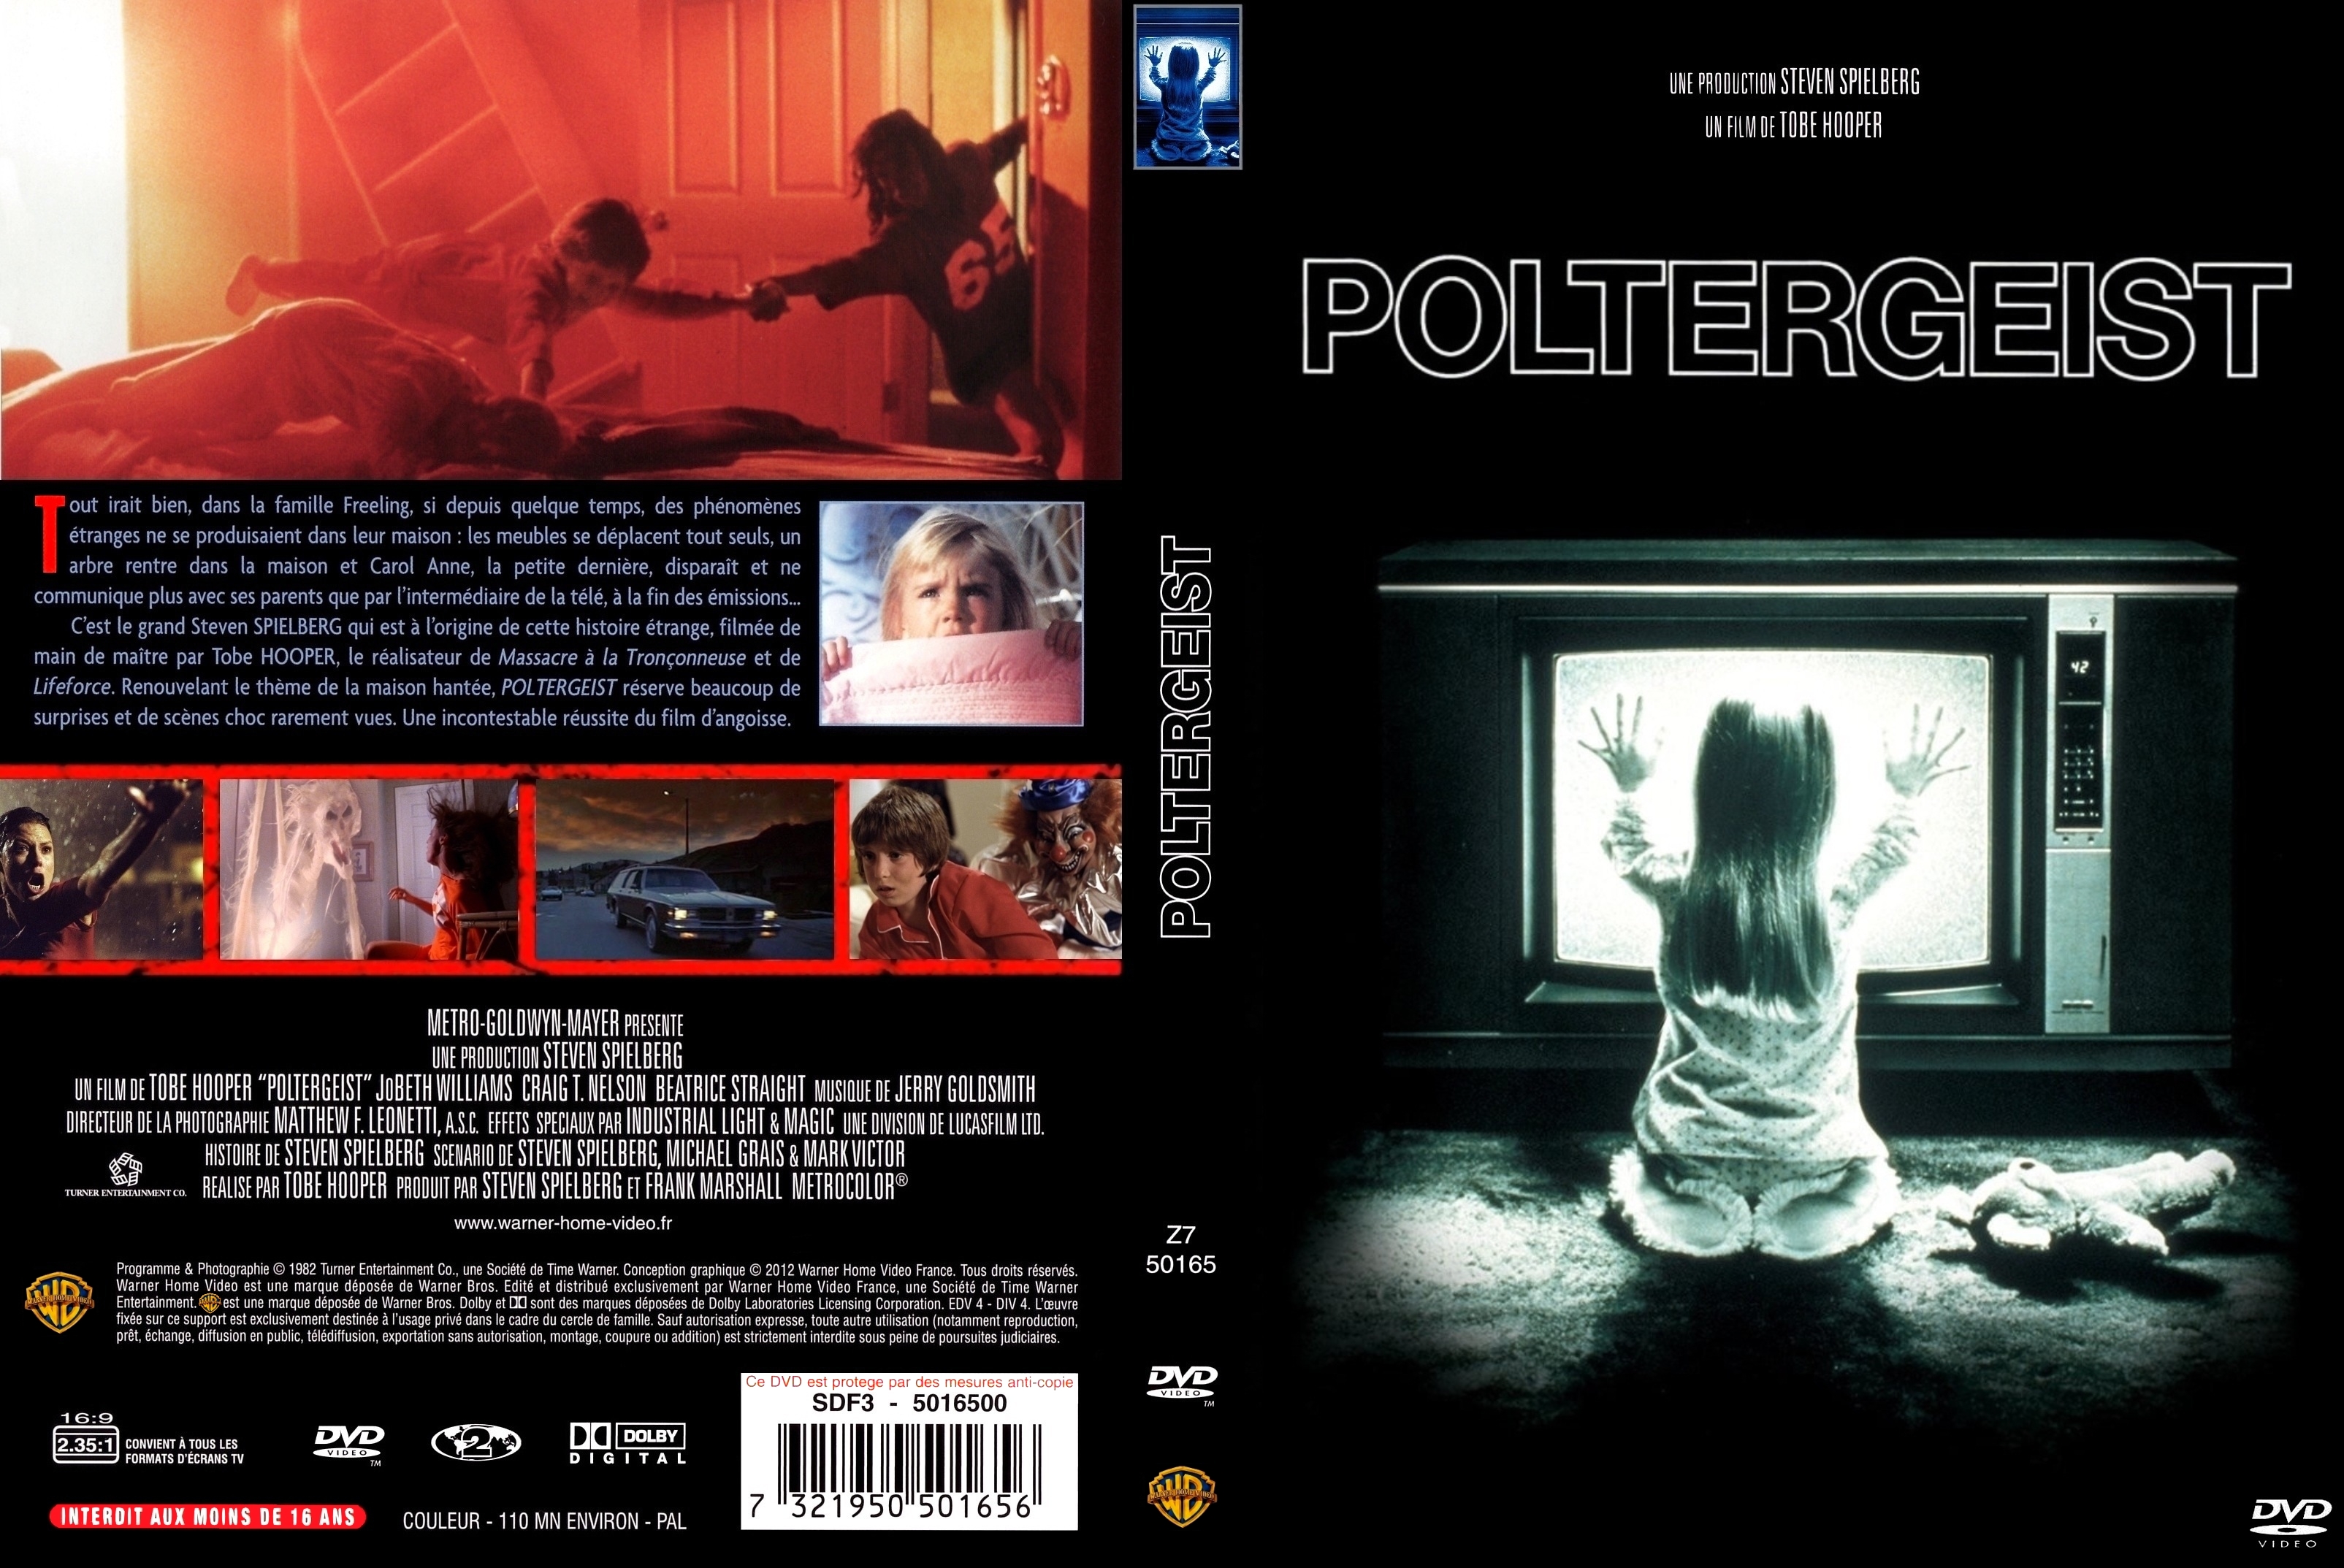 Jaquette DVD Poltergeist custom